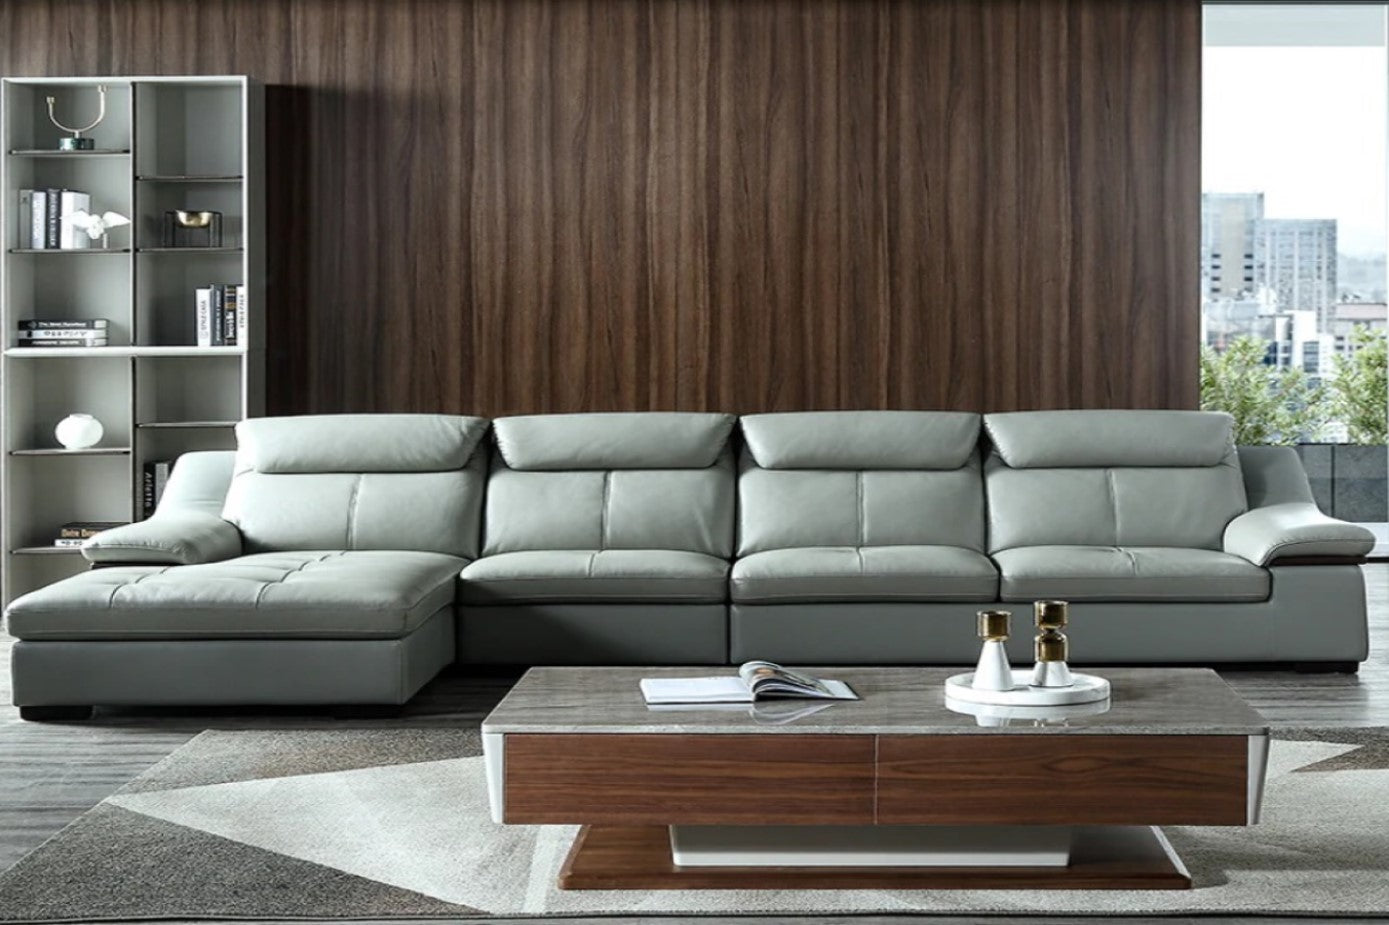 L Shape Sofa Design: 301+ ️ Living Room L Shape Sofa Design ...